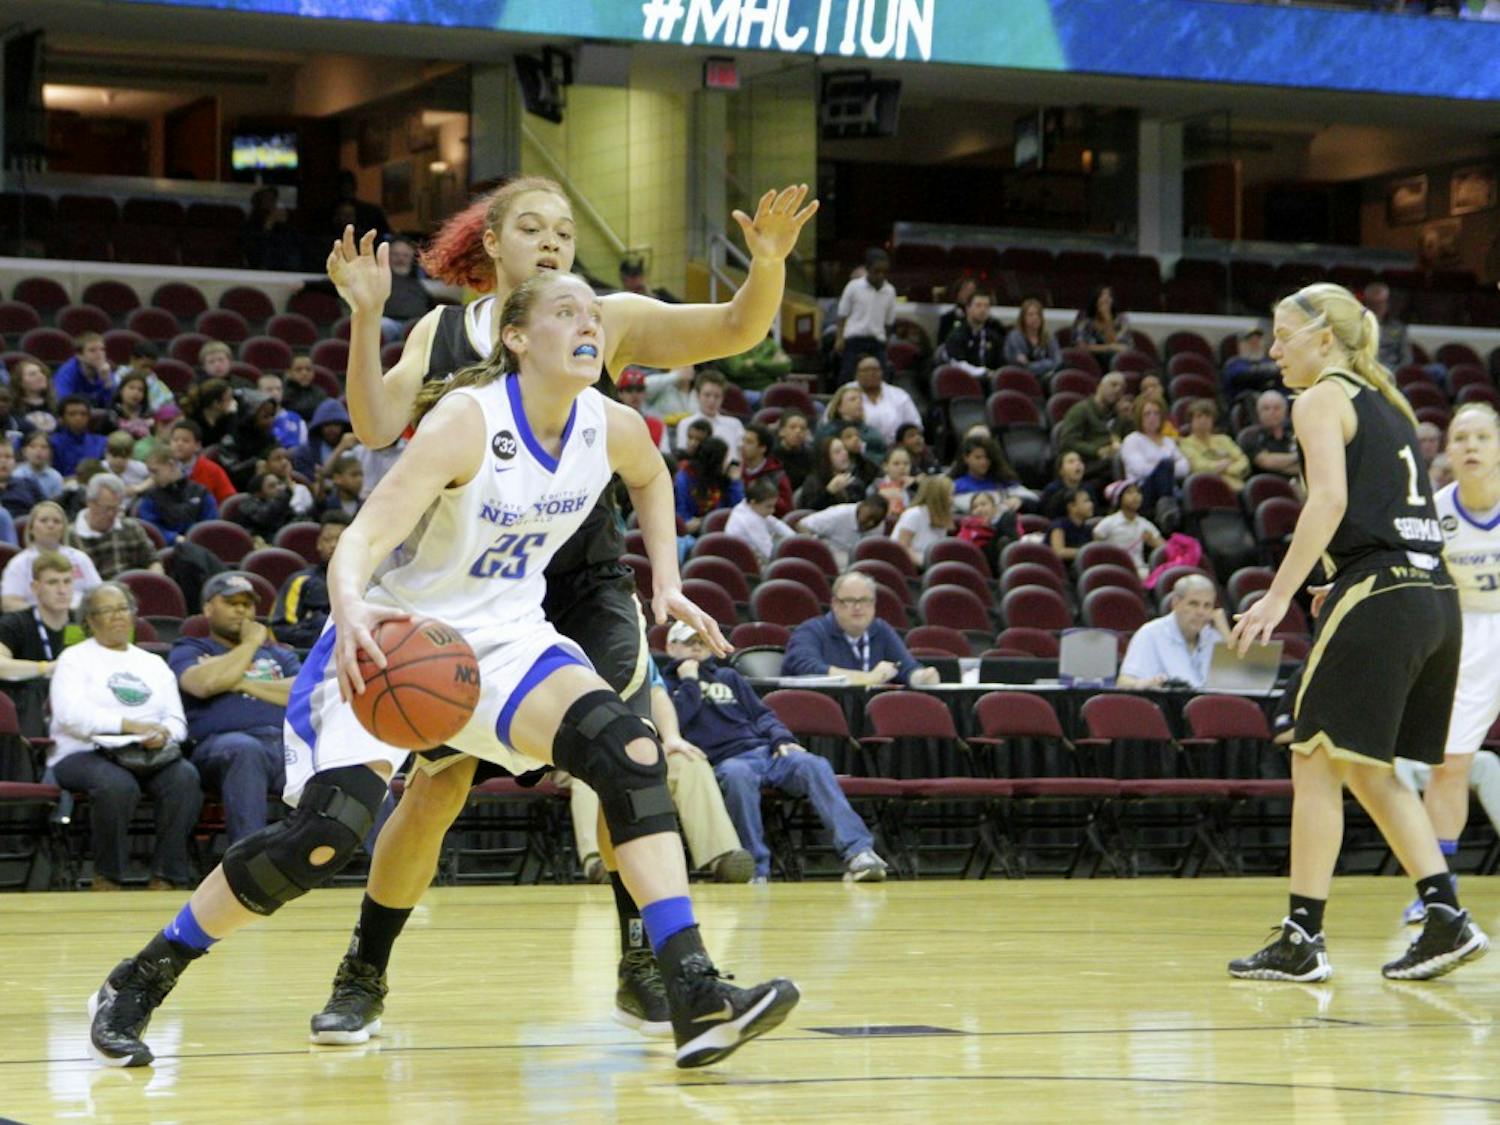 Senior forward Kristen Sharkey drives past a Western Michigan defender toward the basket.